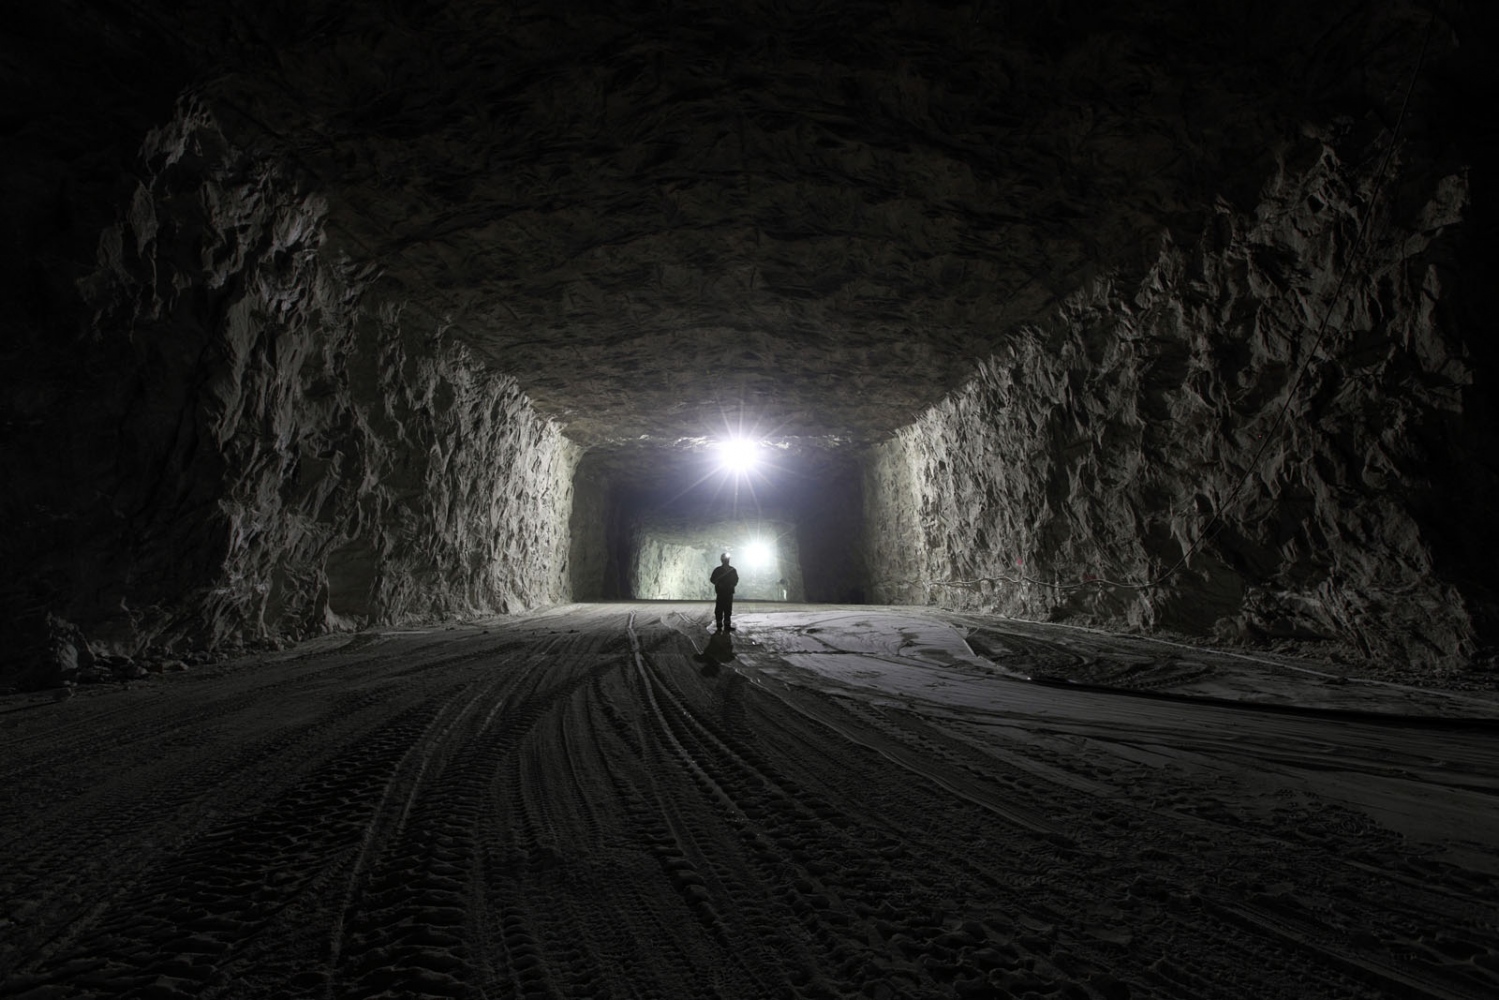 SALT - A Romanian miner stands inside the vast mine shafts of...